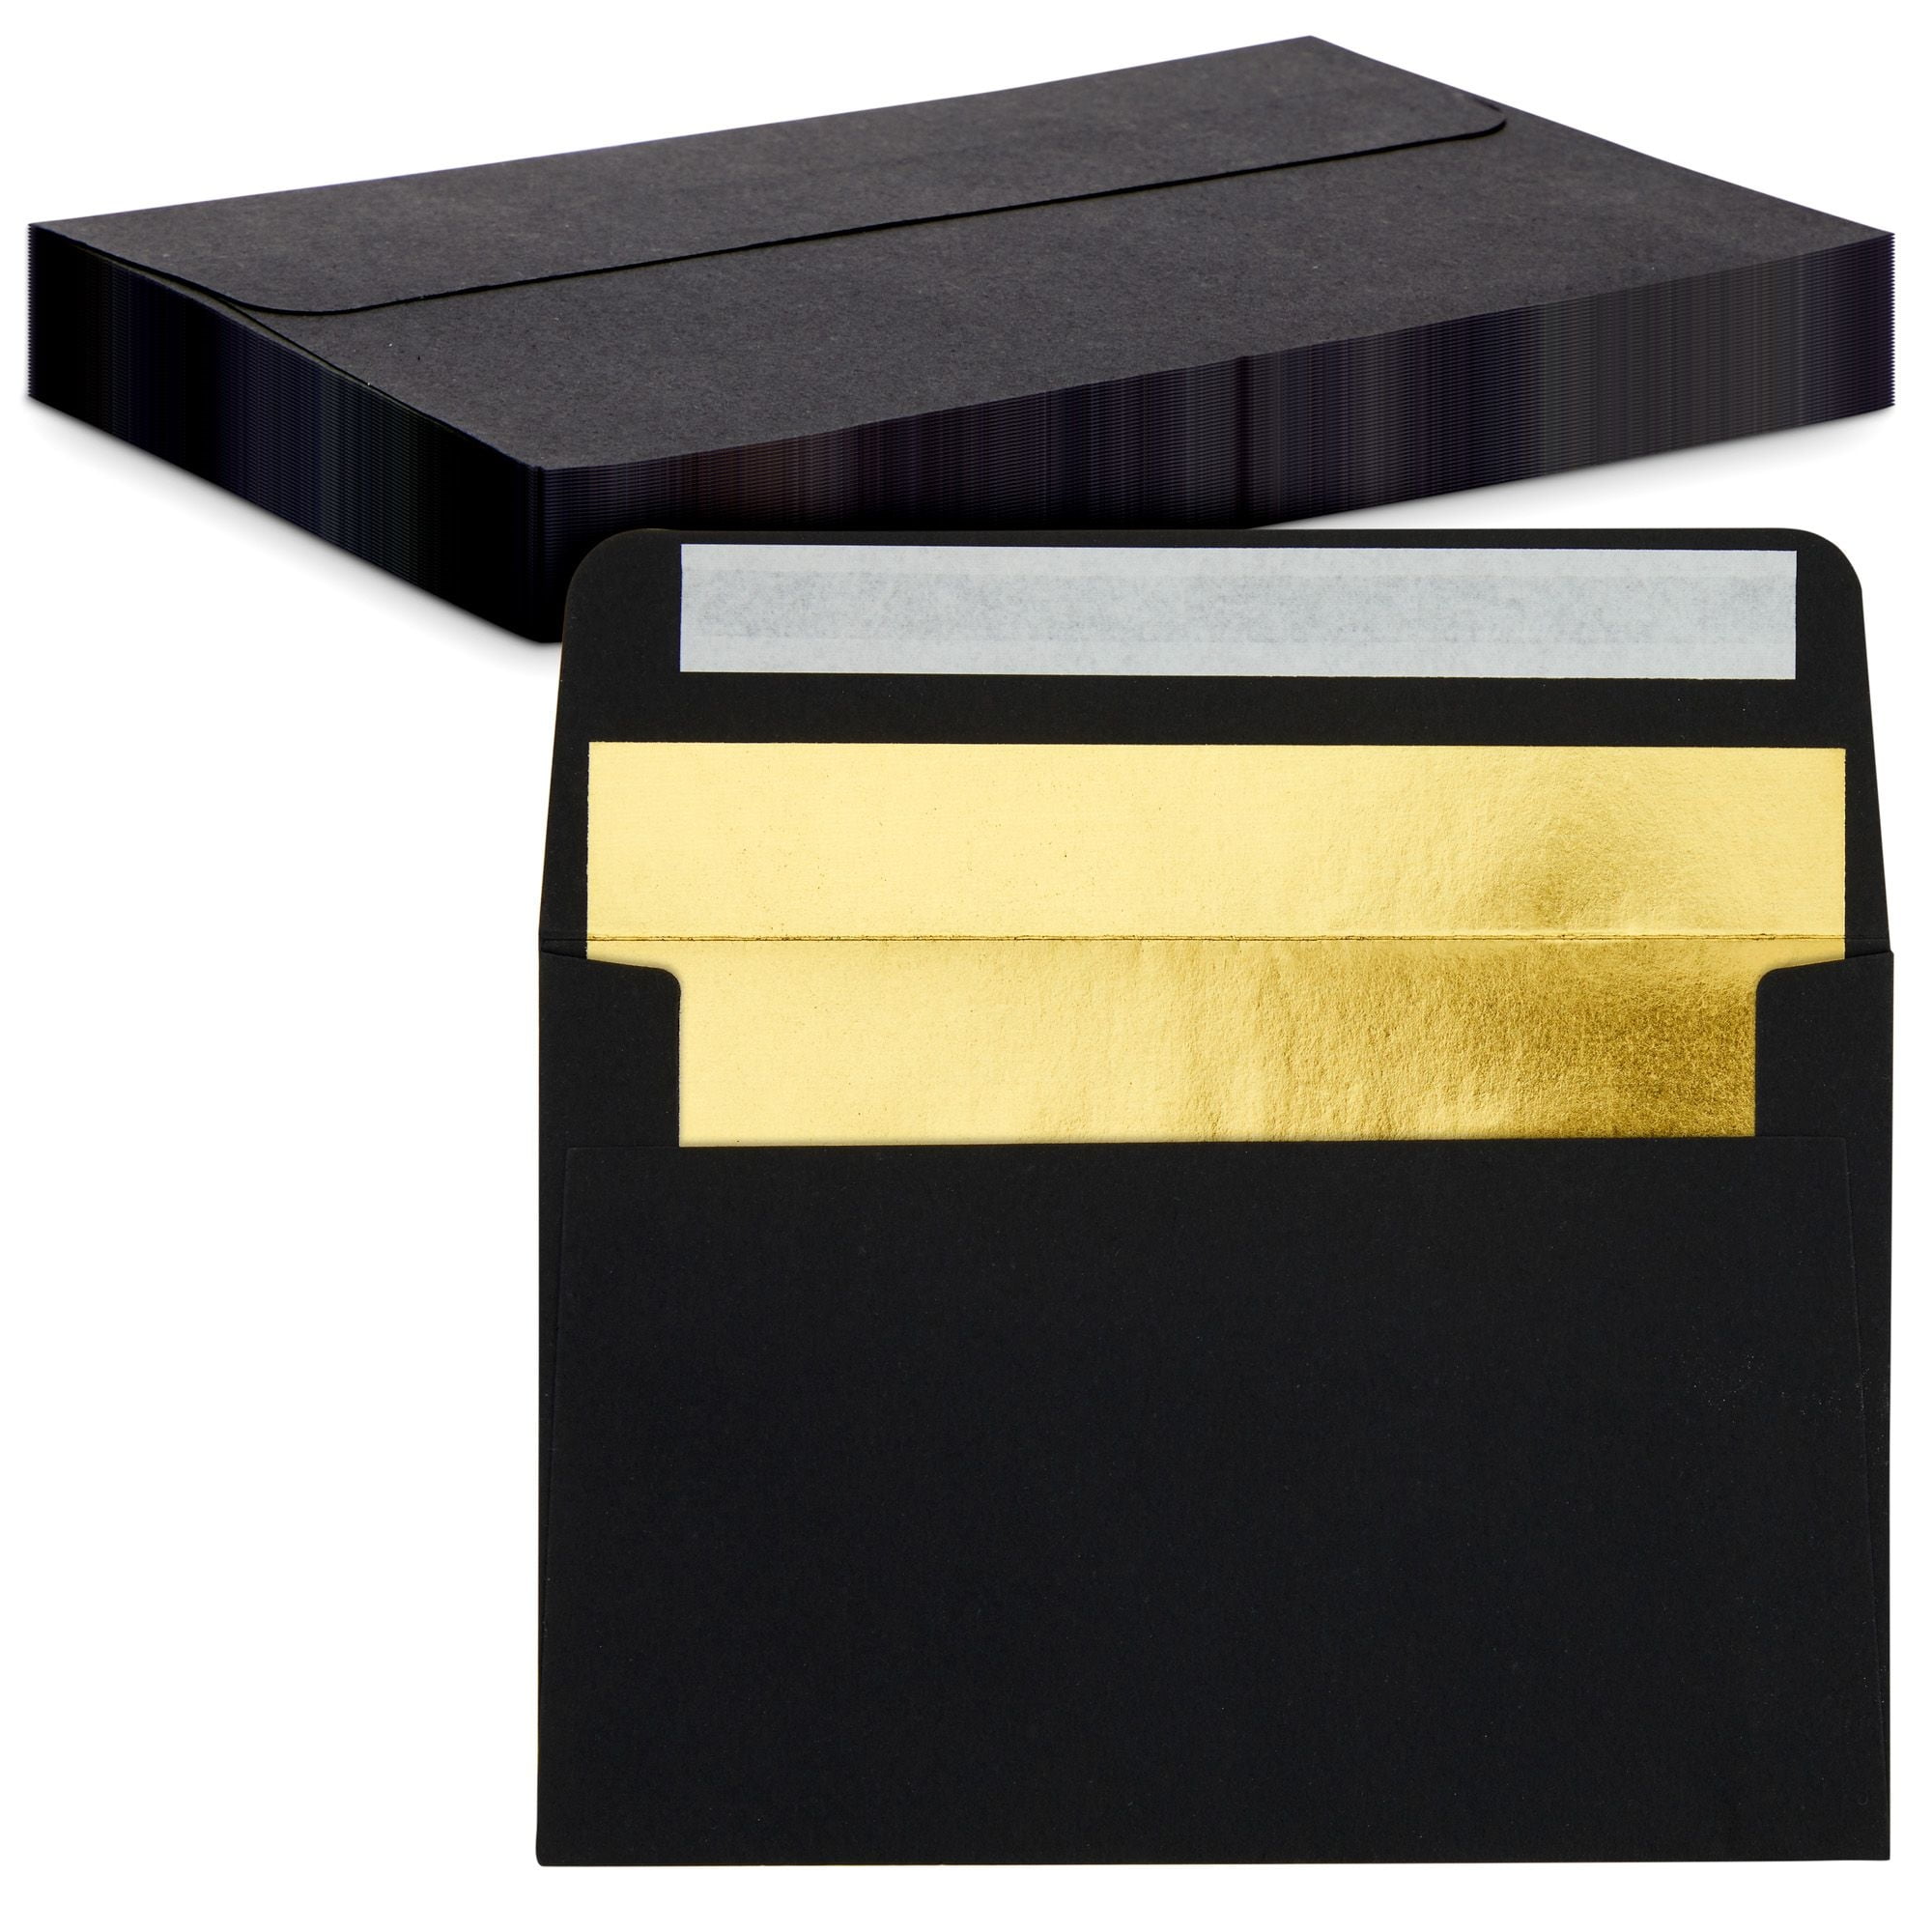 50Pcs A7 (5x7)inColorful Envelopes V Flap Invitation Envelopes for Cards,  Party, Weddings, Graduations(Multicolor) 